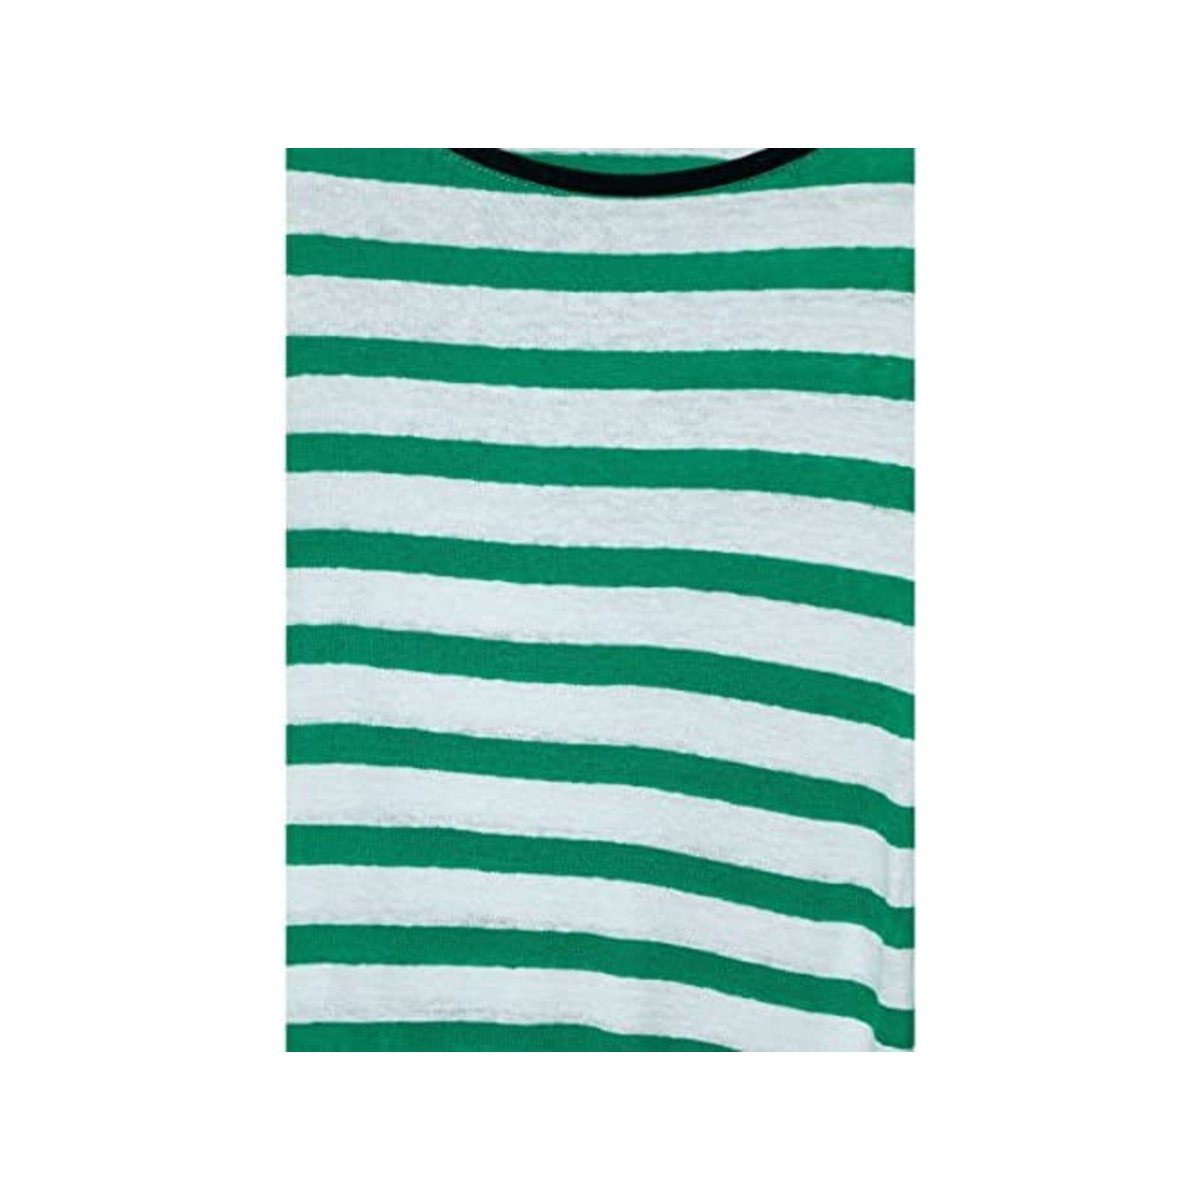 (1-tlg) grün Cecil T-Shirt green trefoil